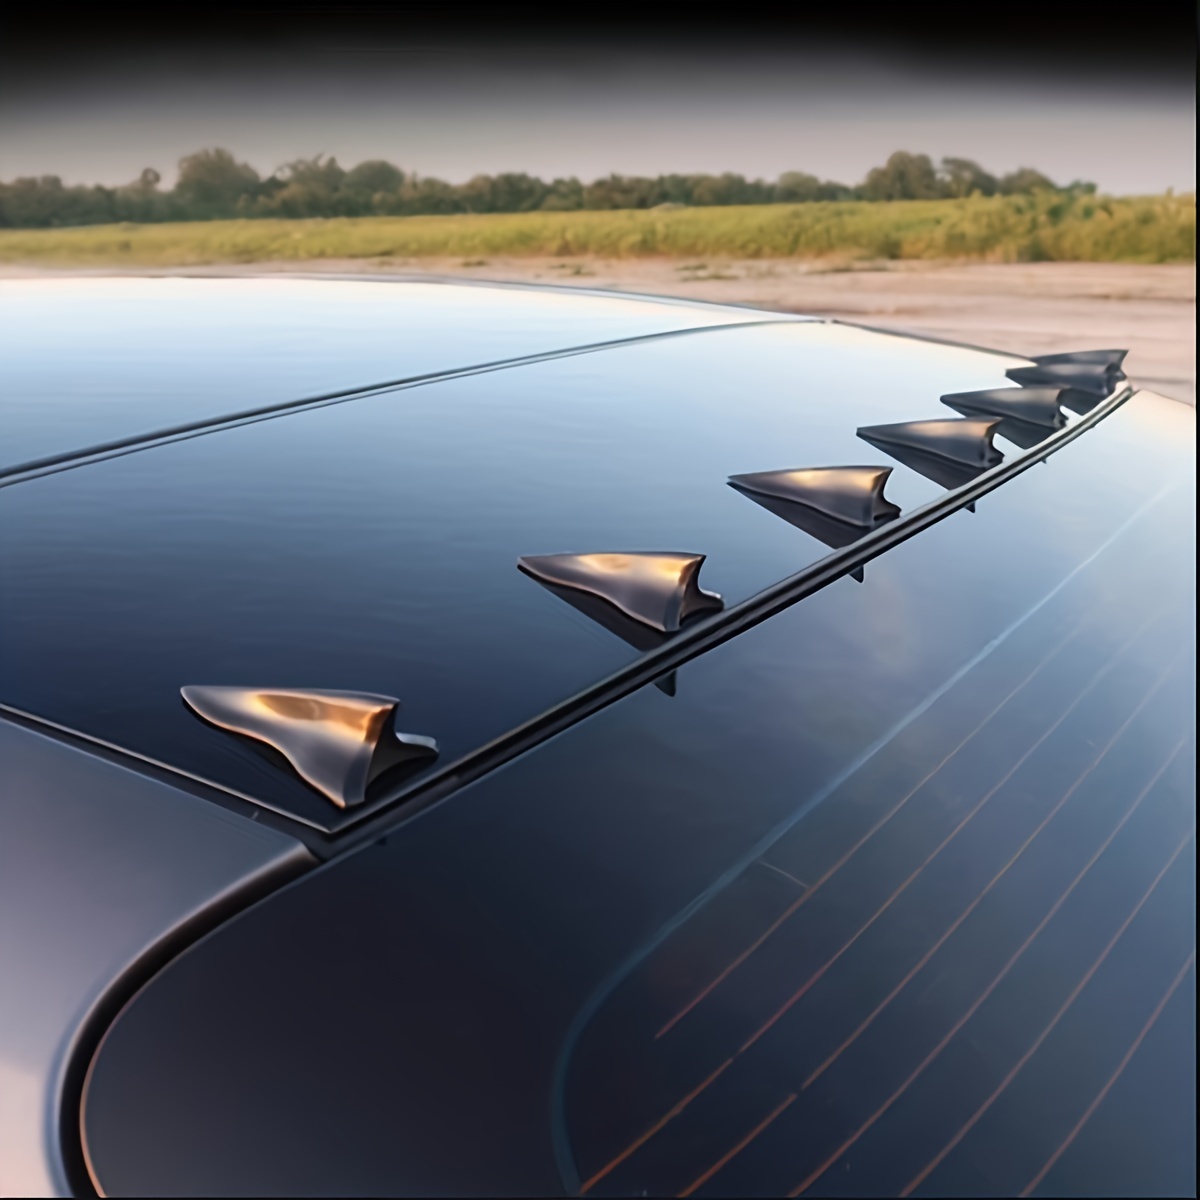 

10pcs Carbon Fibre Car Spoiler, Shark Fin Universal Roof And Rear Wing Sticker